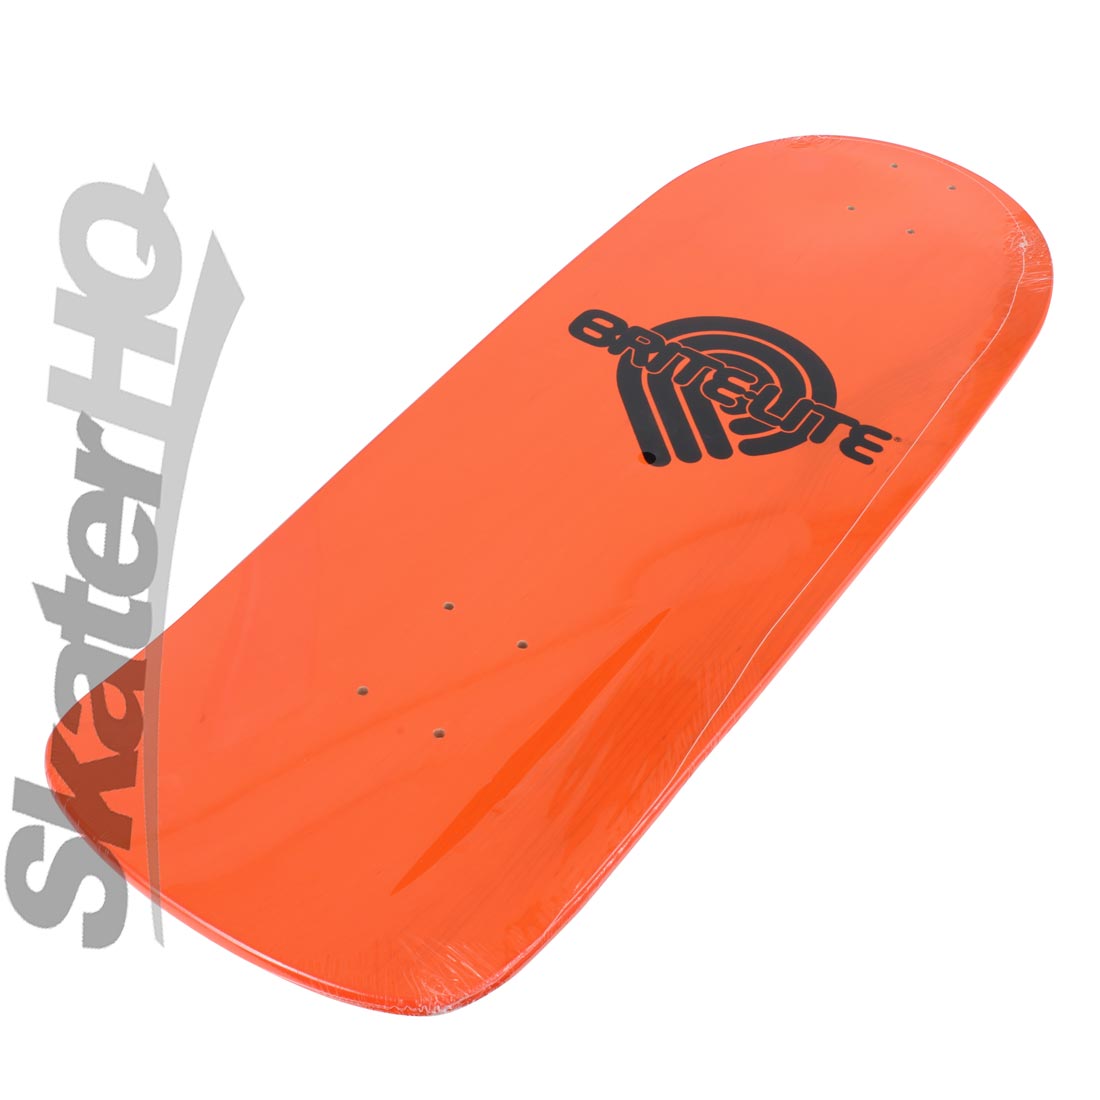 Powell Peralta Rodriguez Snub Nose OG Deck - Orange Skateboard Decks Old School